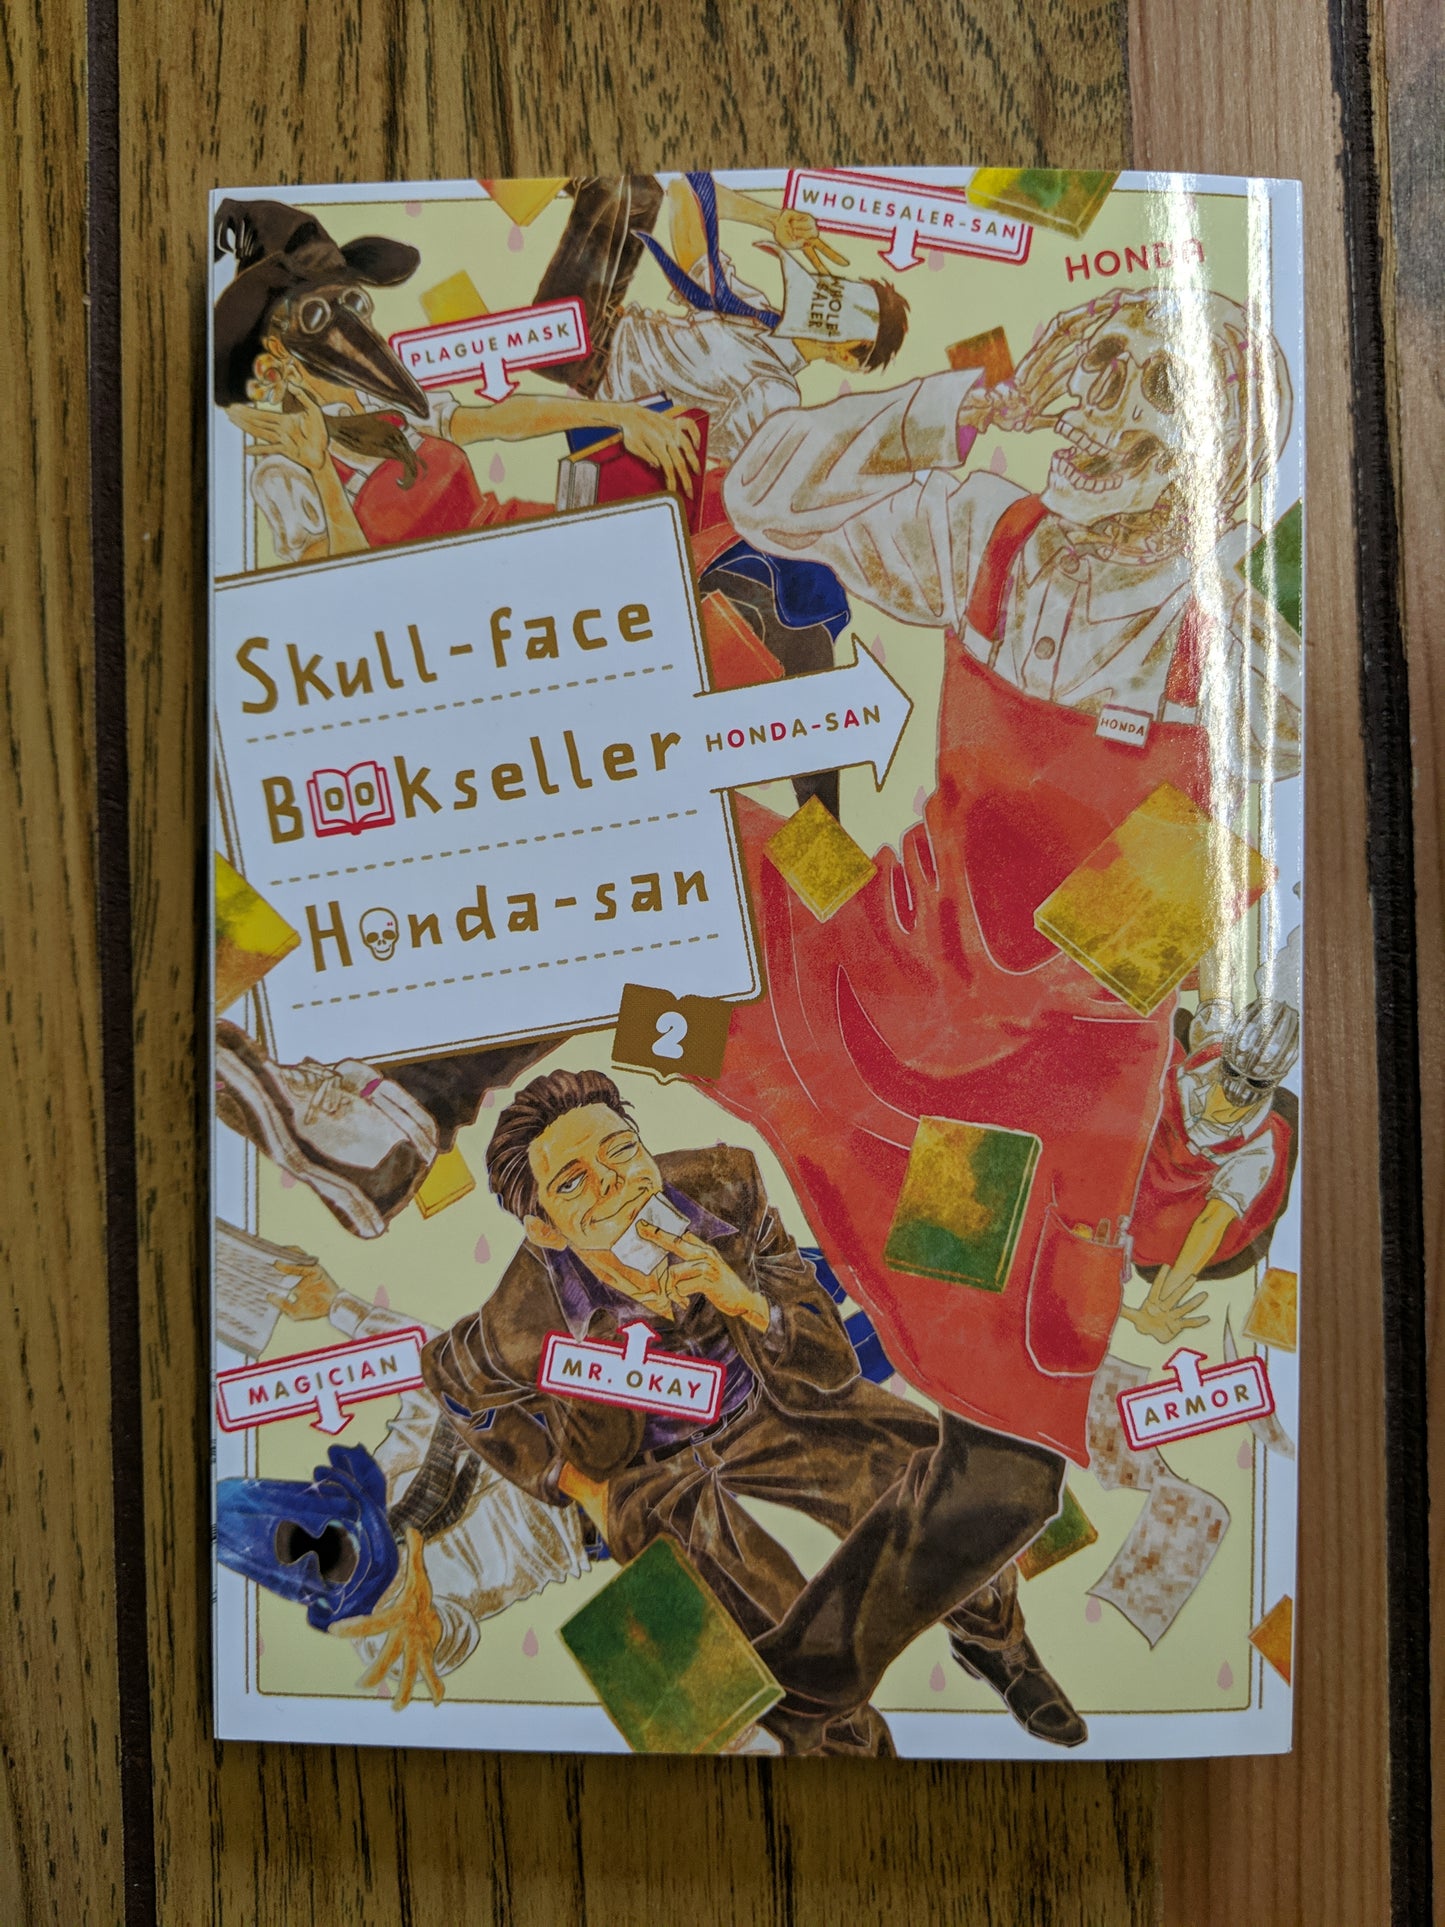 Skull-face Bookseller Honda-san Vol 2